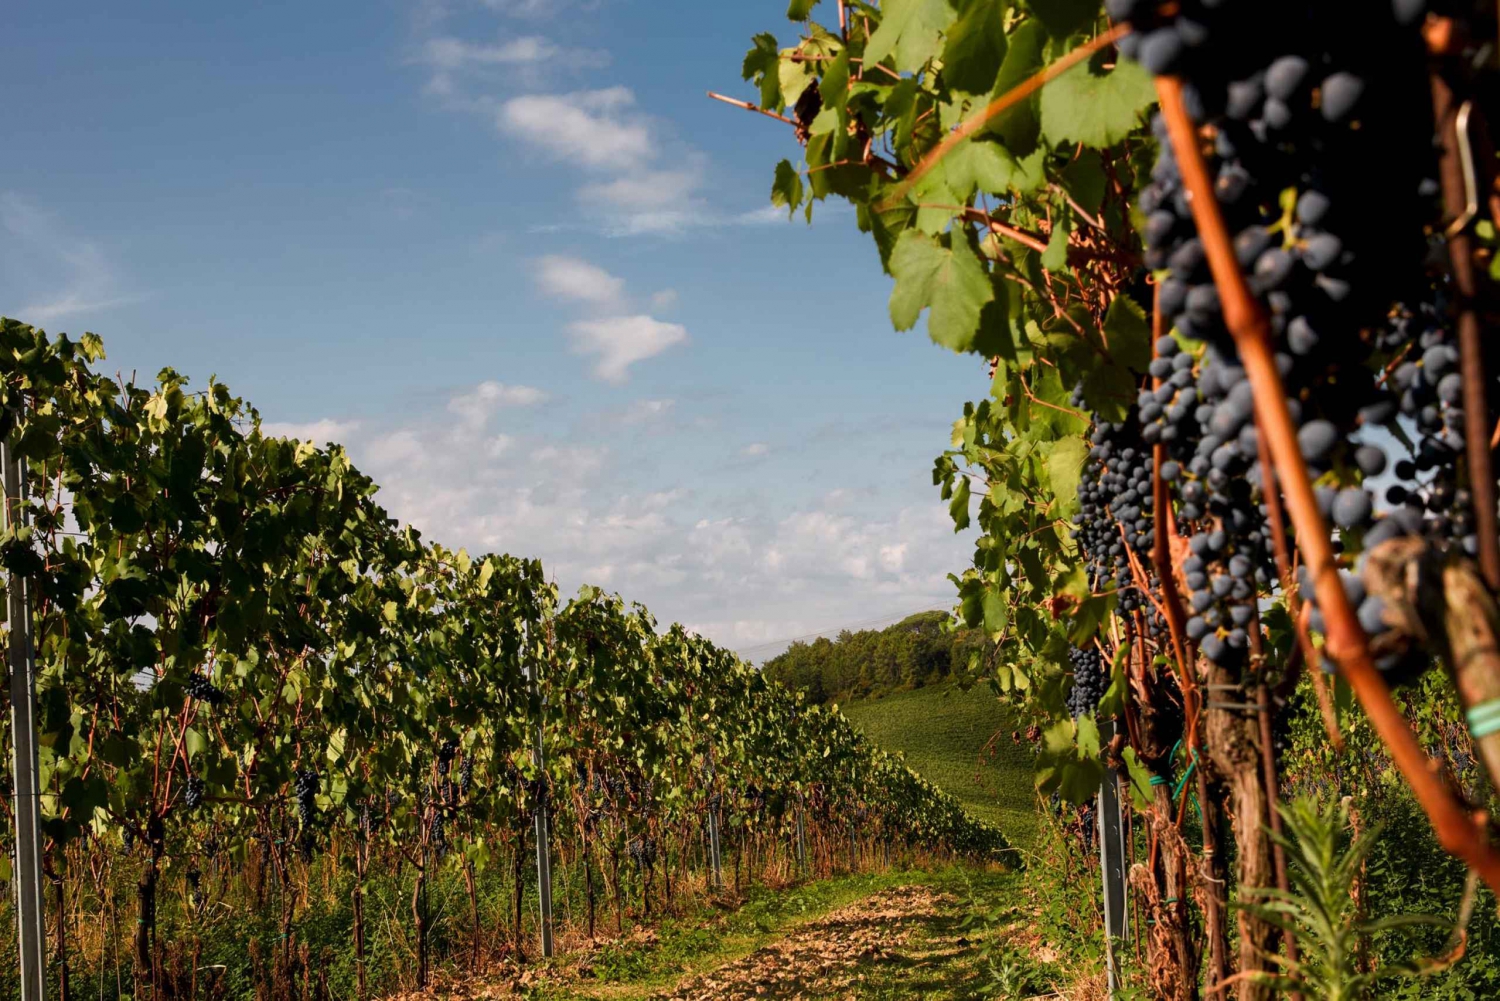 Chianti Colli Fiorentini Winery Tour 18 km od Florencji